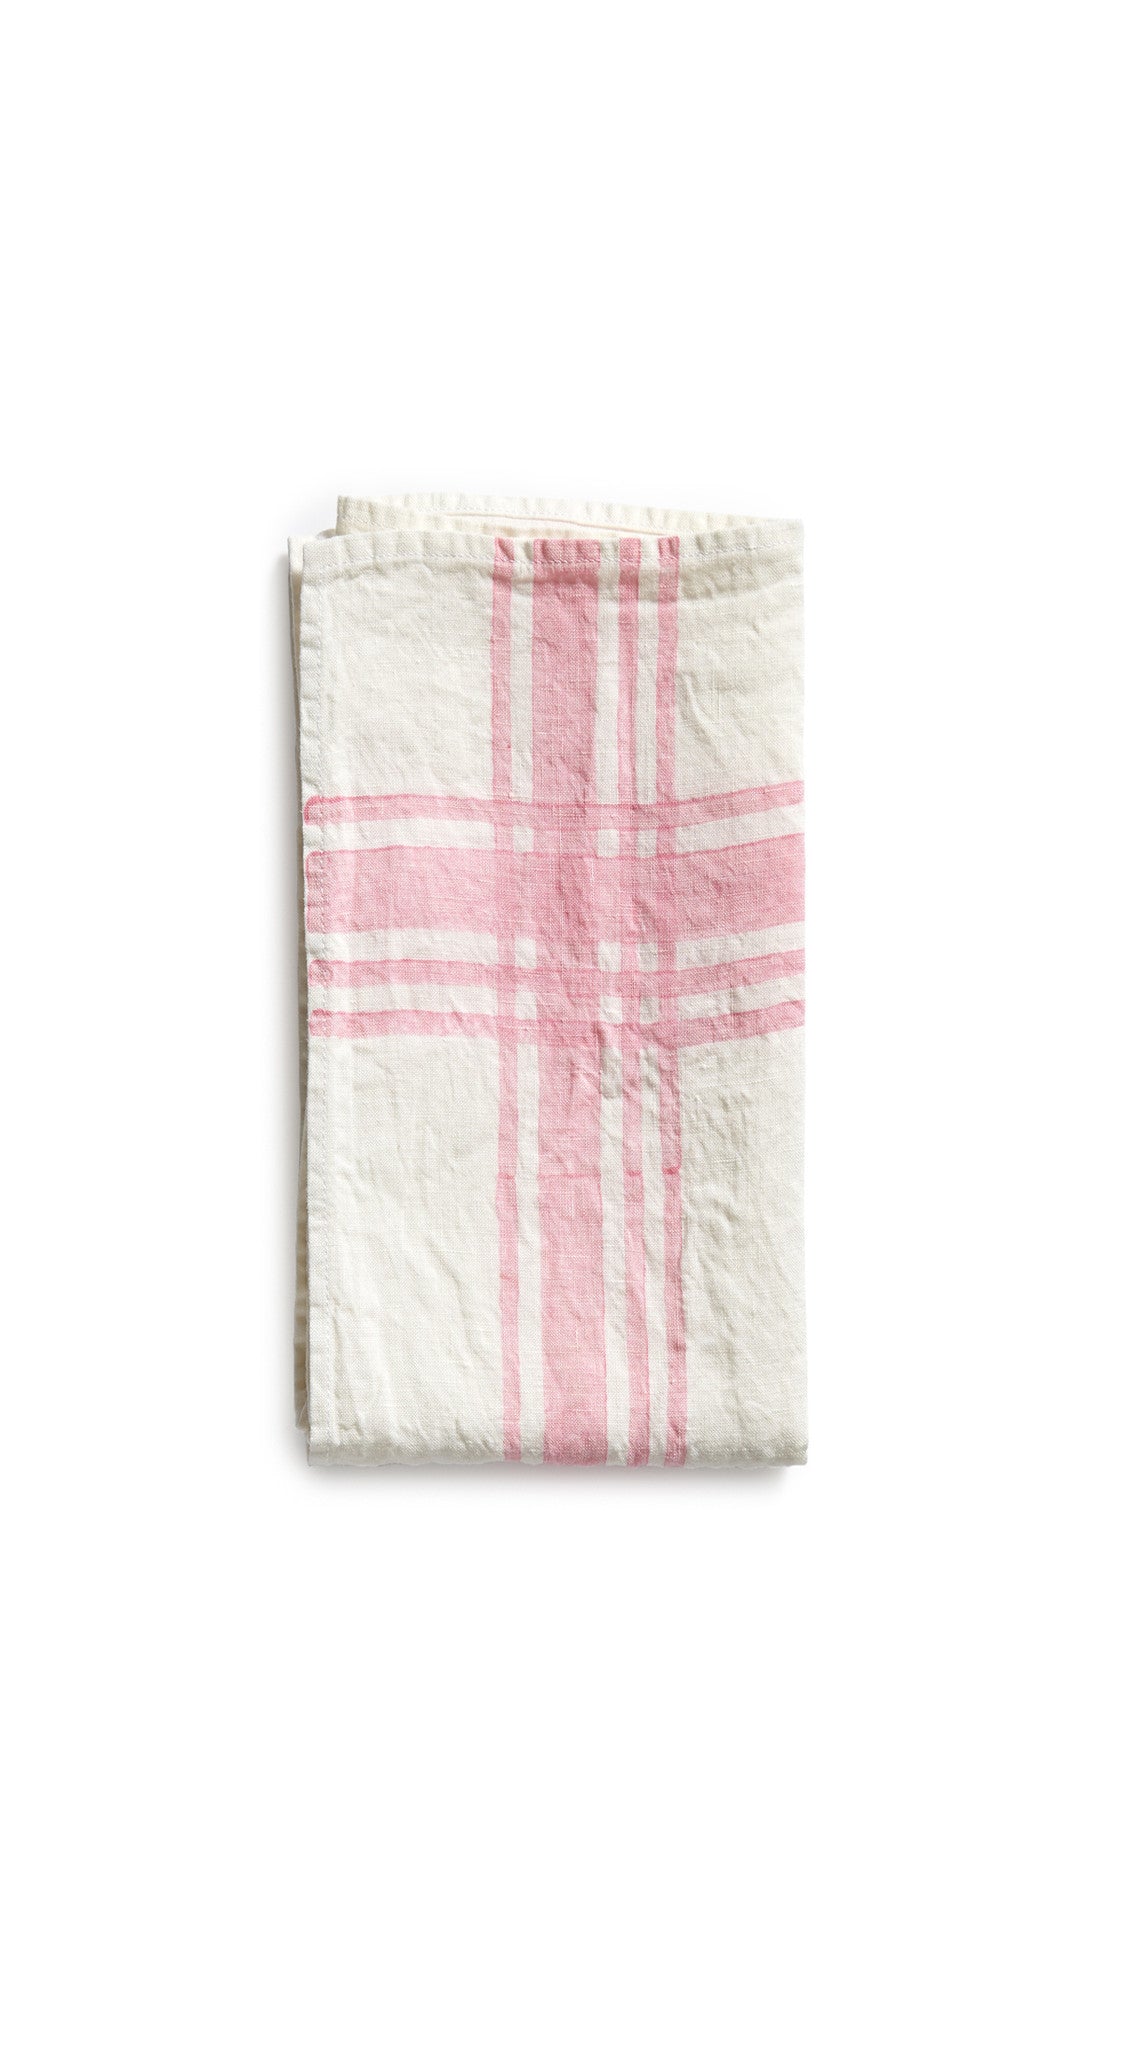 Stripe Linen Tea Towel in Rose Pink, 55x70cm